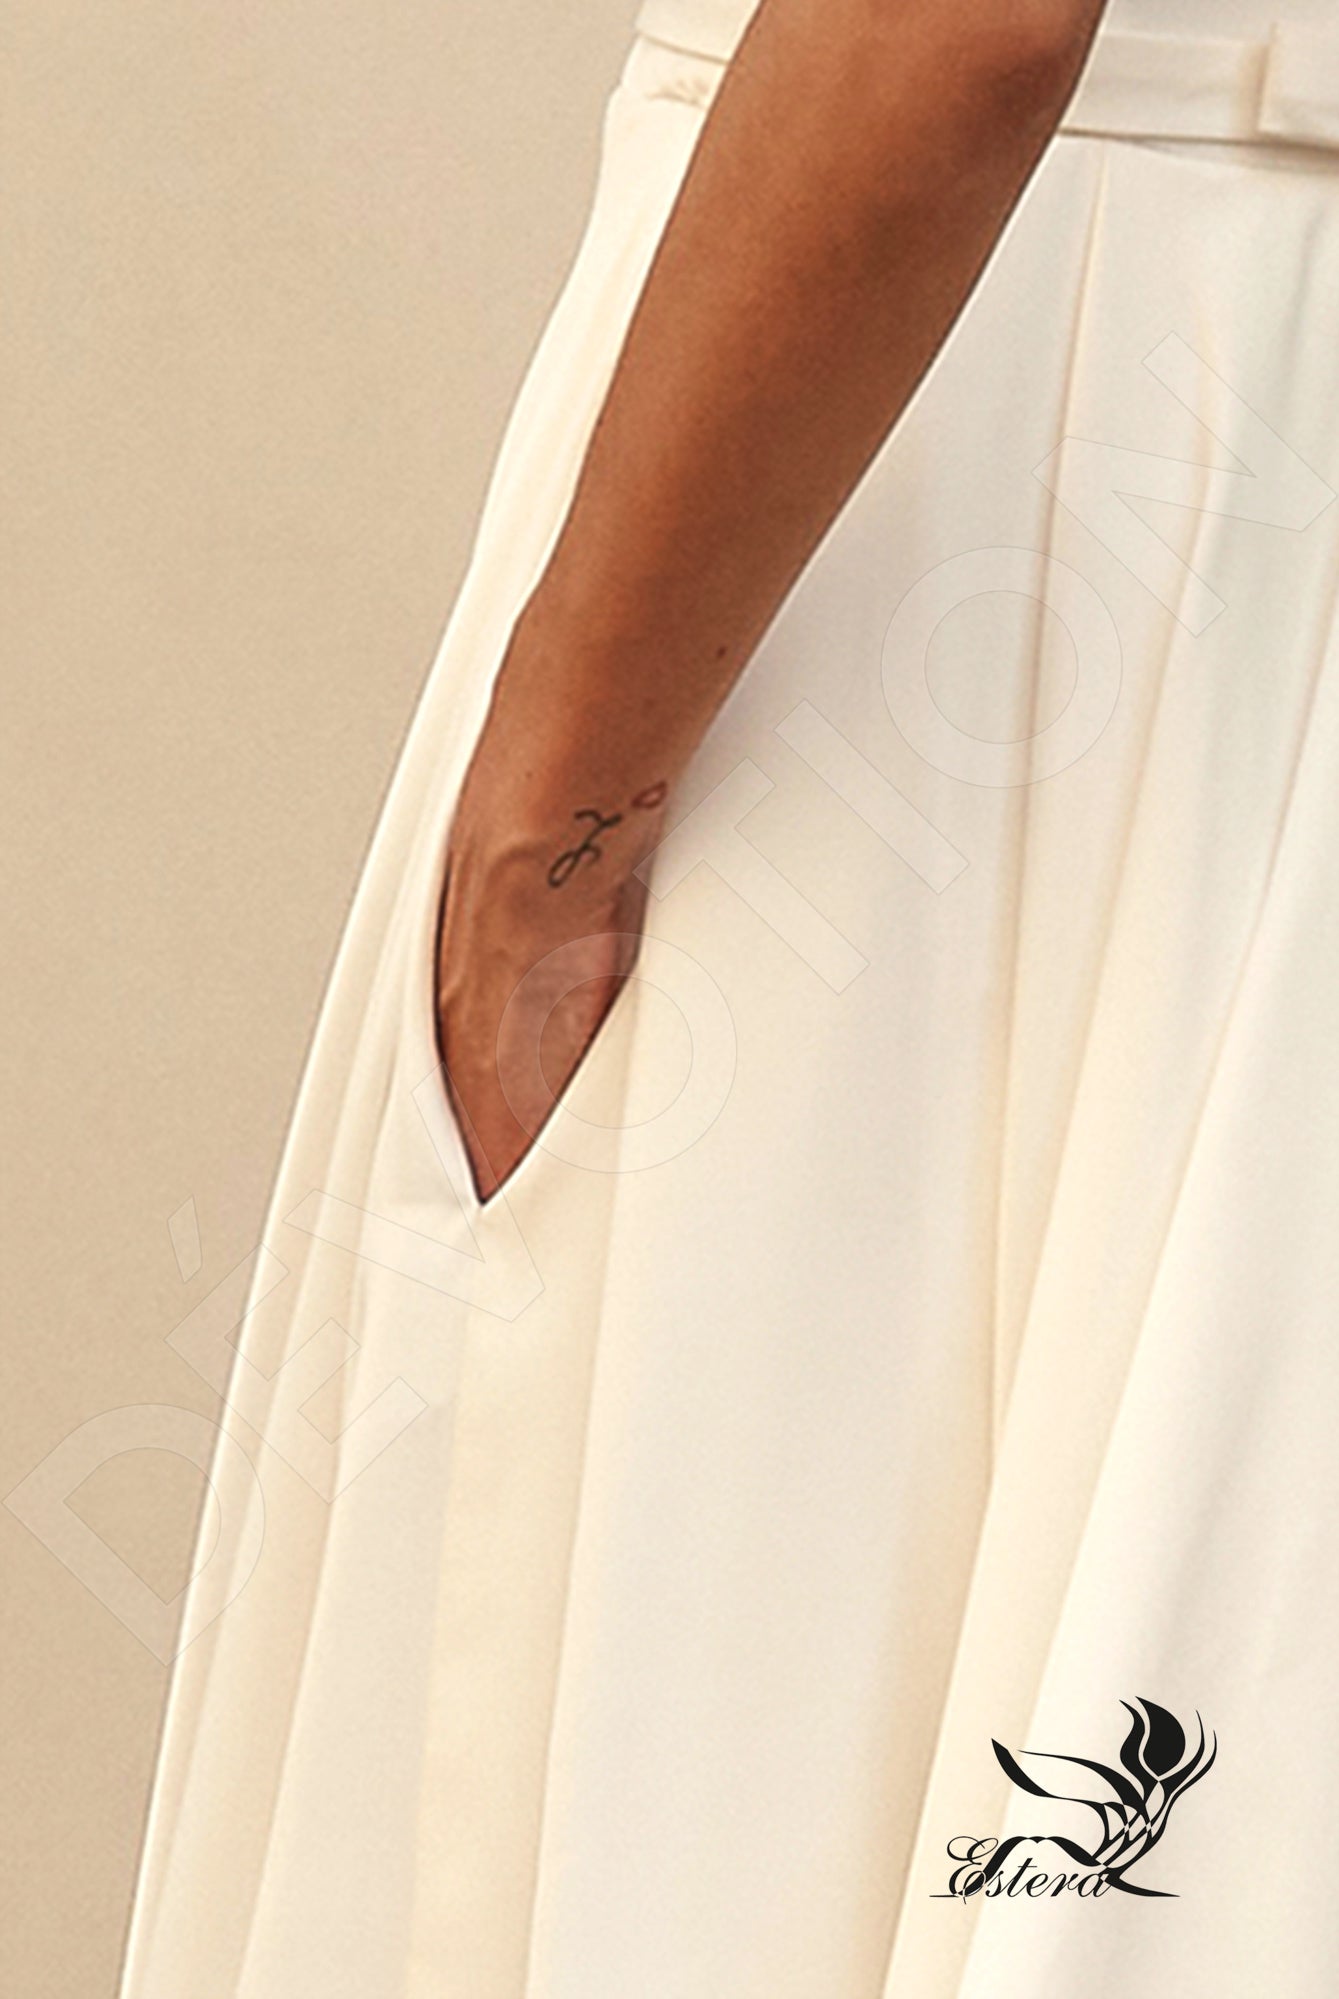 Alida A-line V-neck Ivory Wedding dress